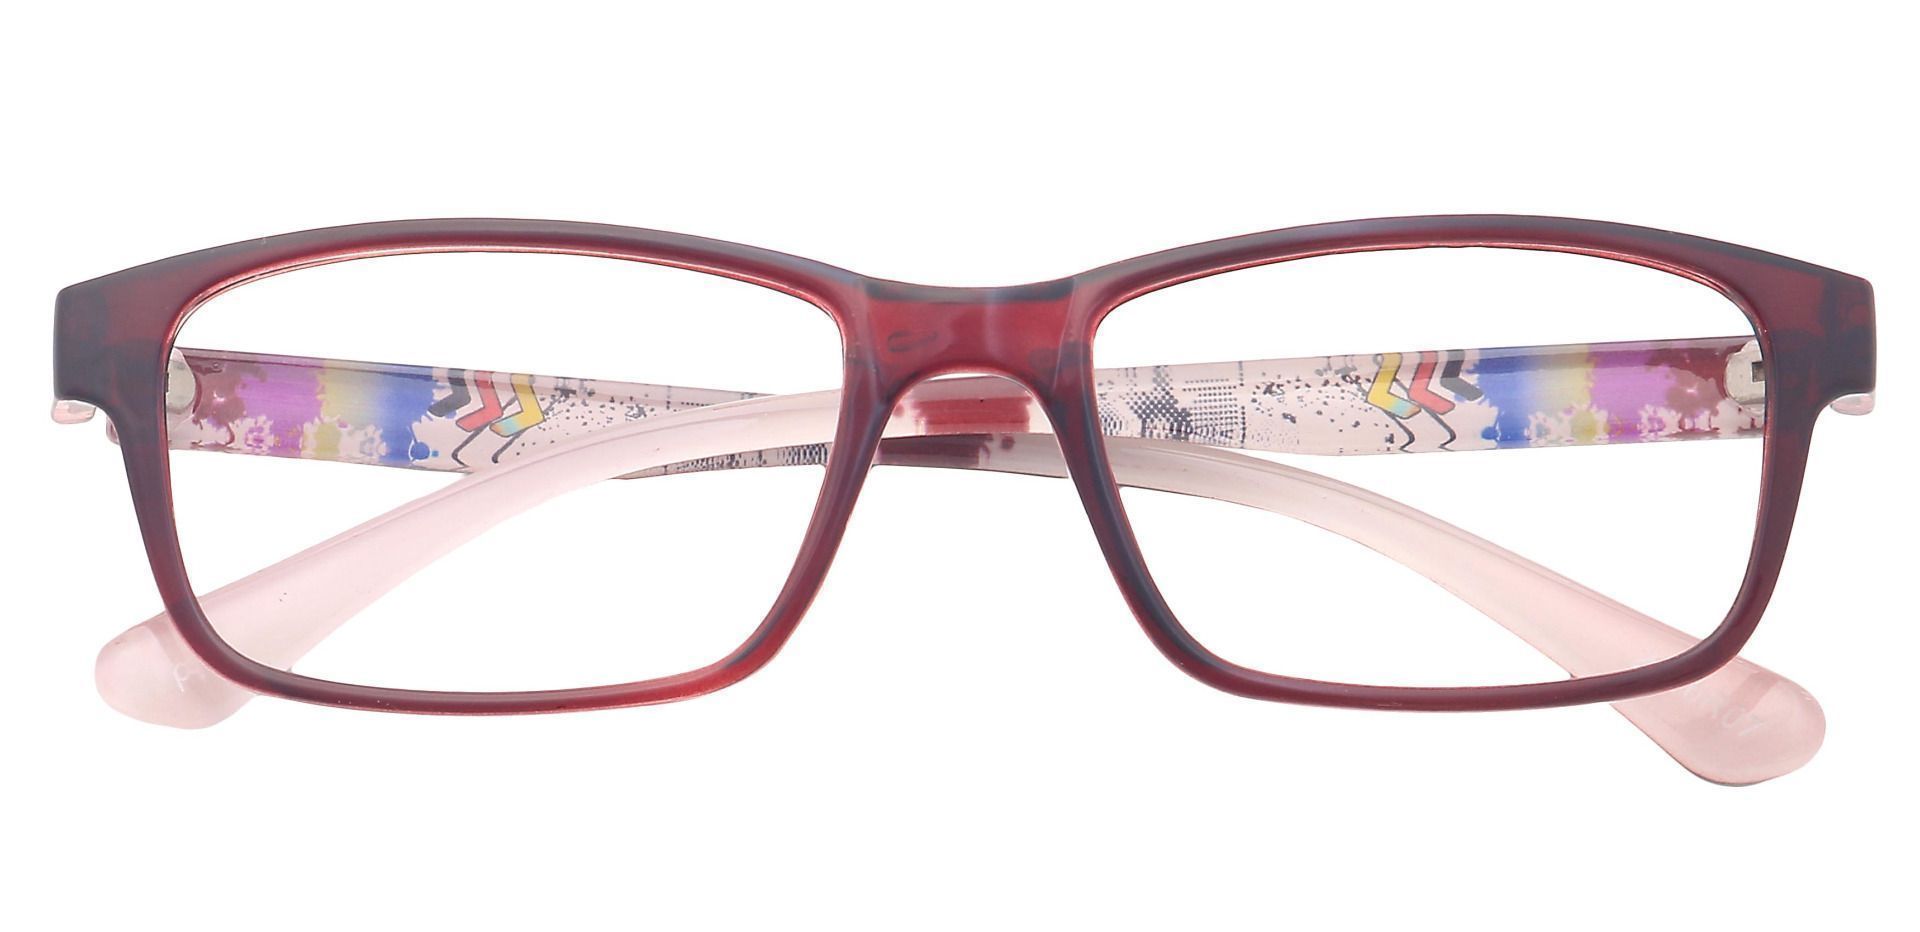 Patrice Rectangle Eyeglasses Frame - Red